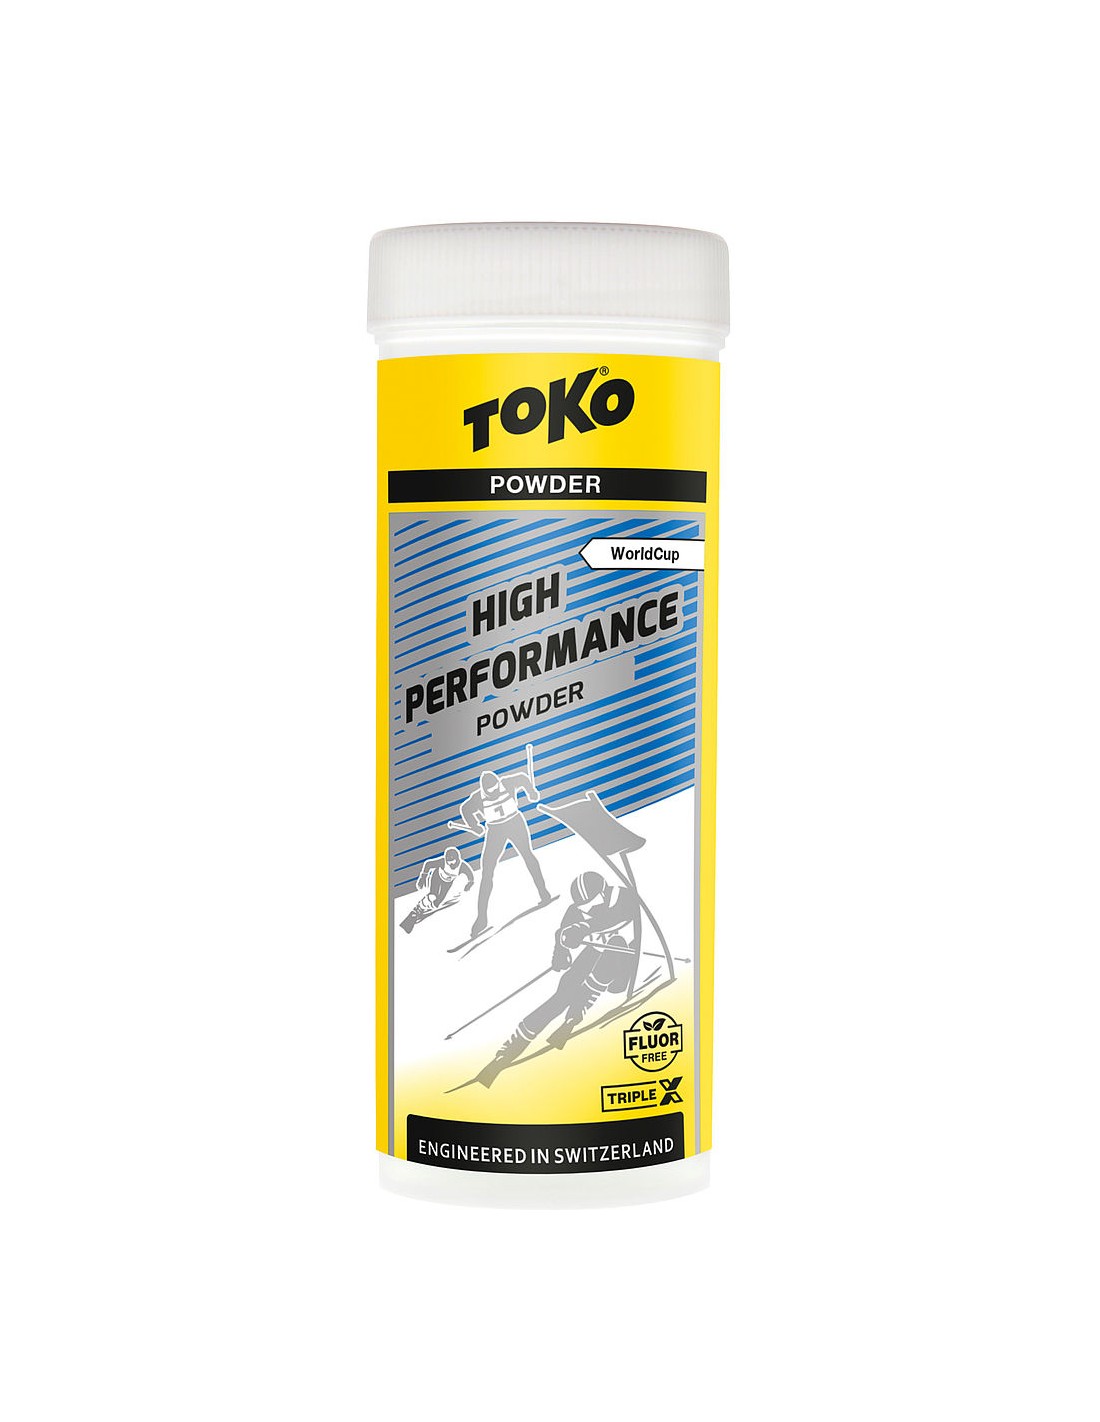 Toko High Performance Powder blue Wachs Toko - Toko / -10° bis -30°, Wachsart - Powderwachs, Wachsfarbe - Blau, von Toko